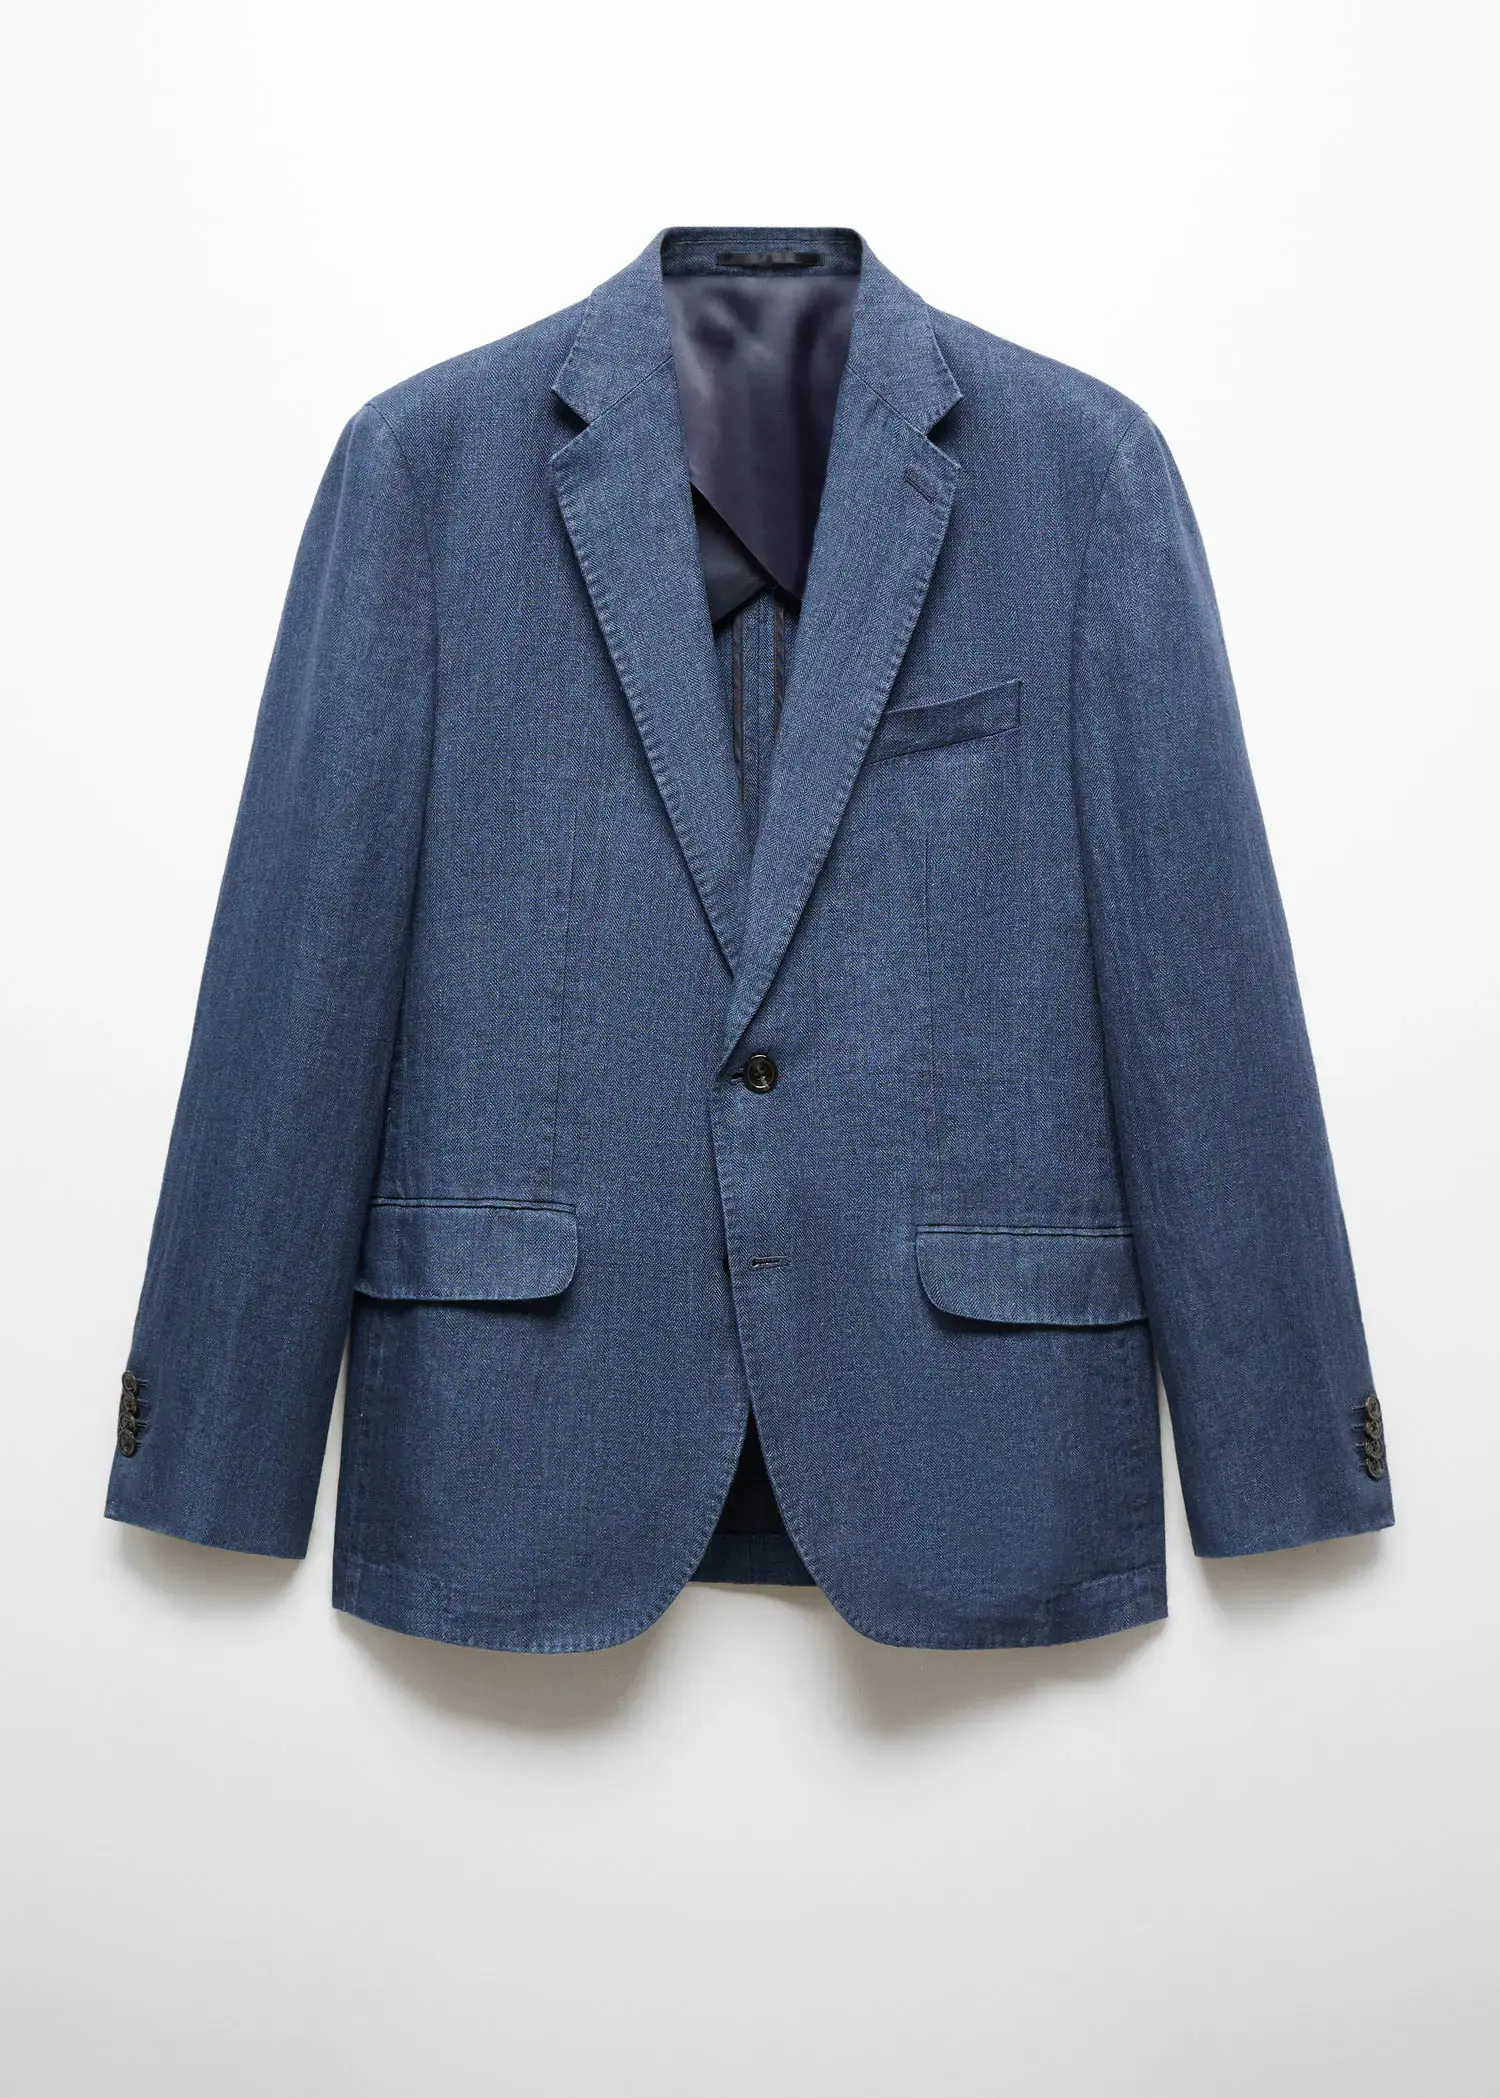 Mango Slim fit suit jacket in 100% herringbone linen. 1